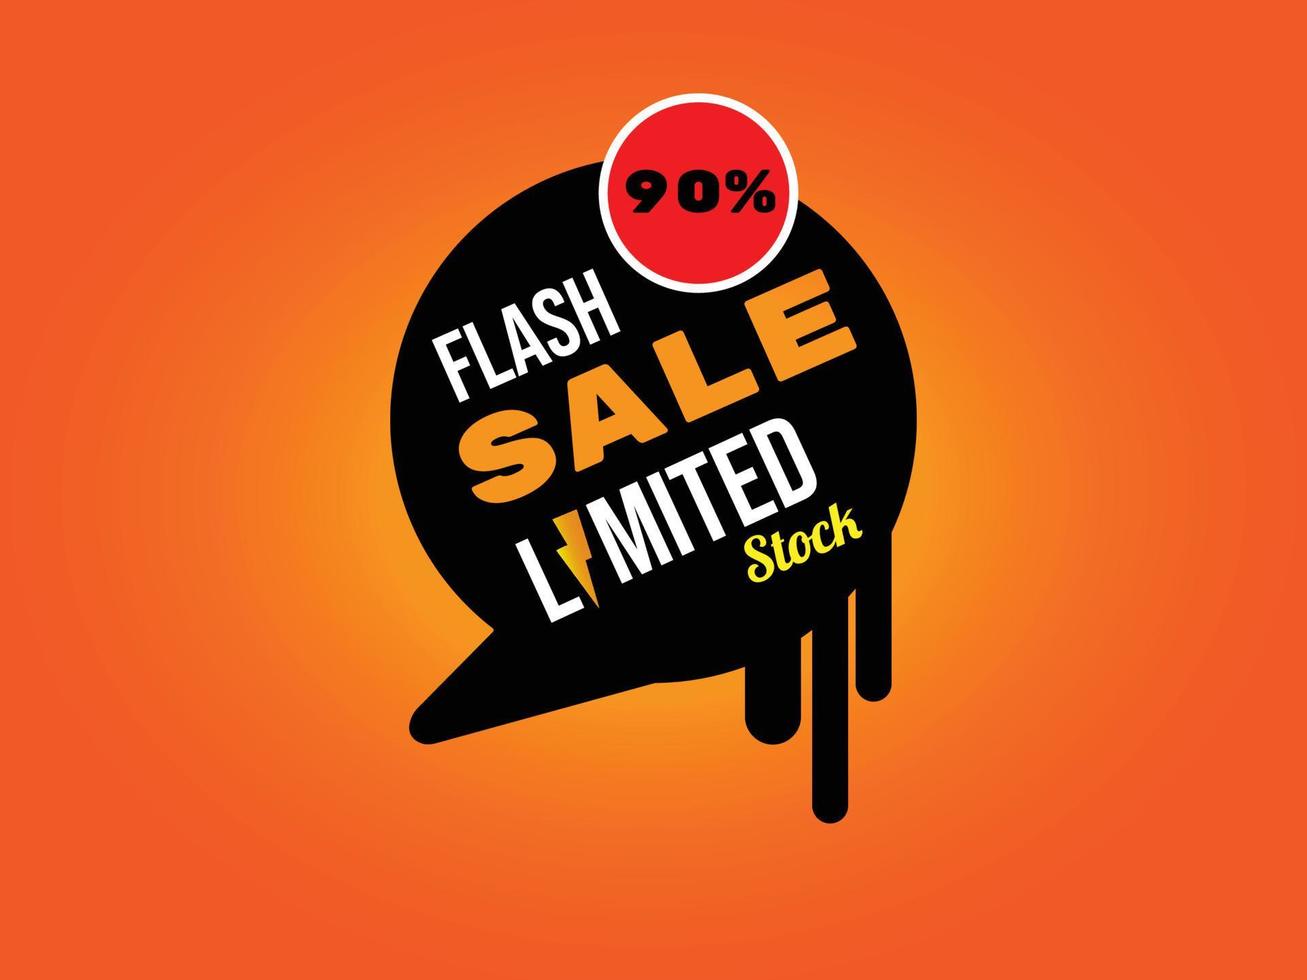 flash sale big discount promotion banner wallpaper background vector